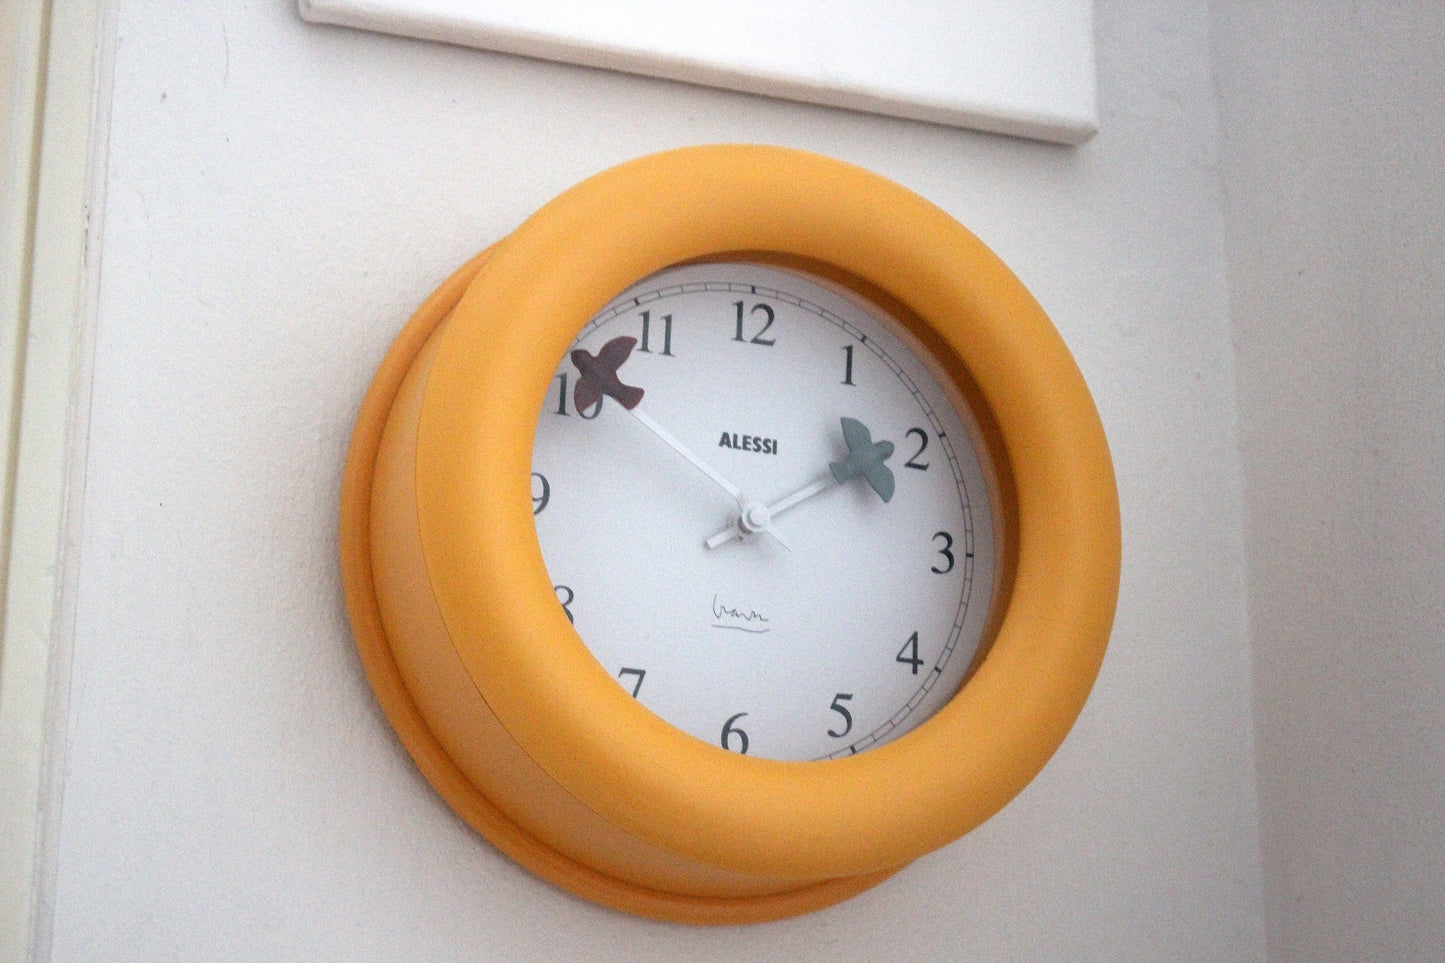 Alessi Wall Clock - 10 AZ by Michael Graves